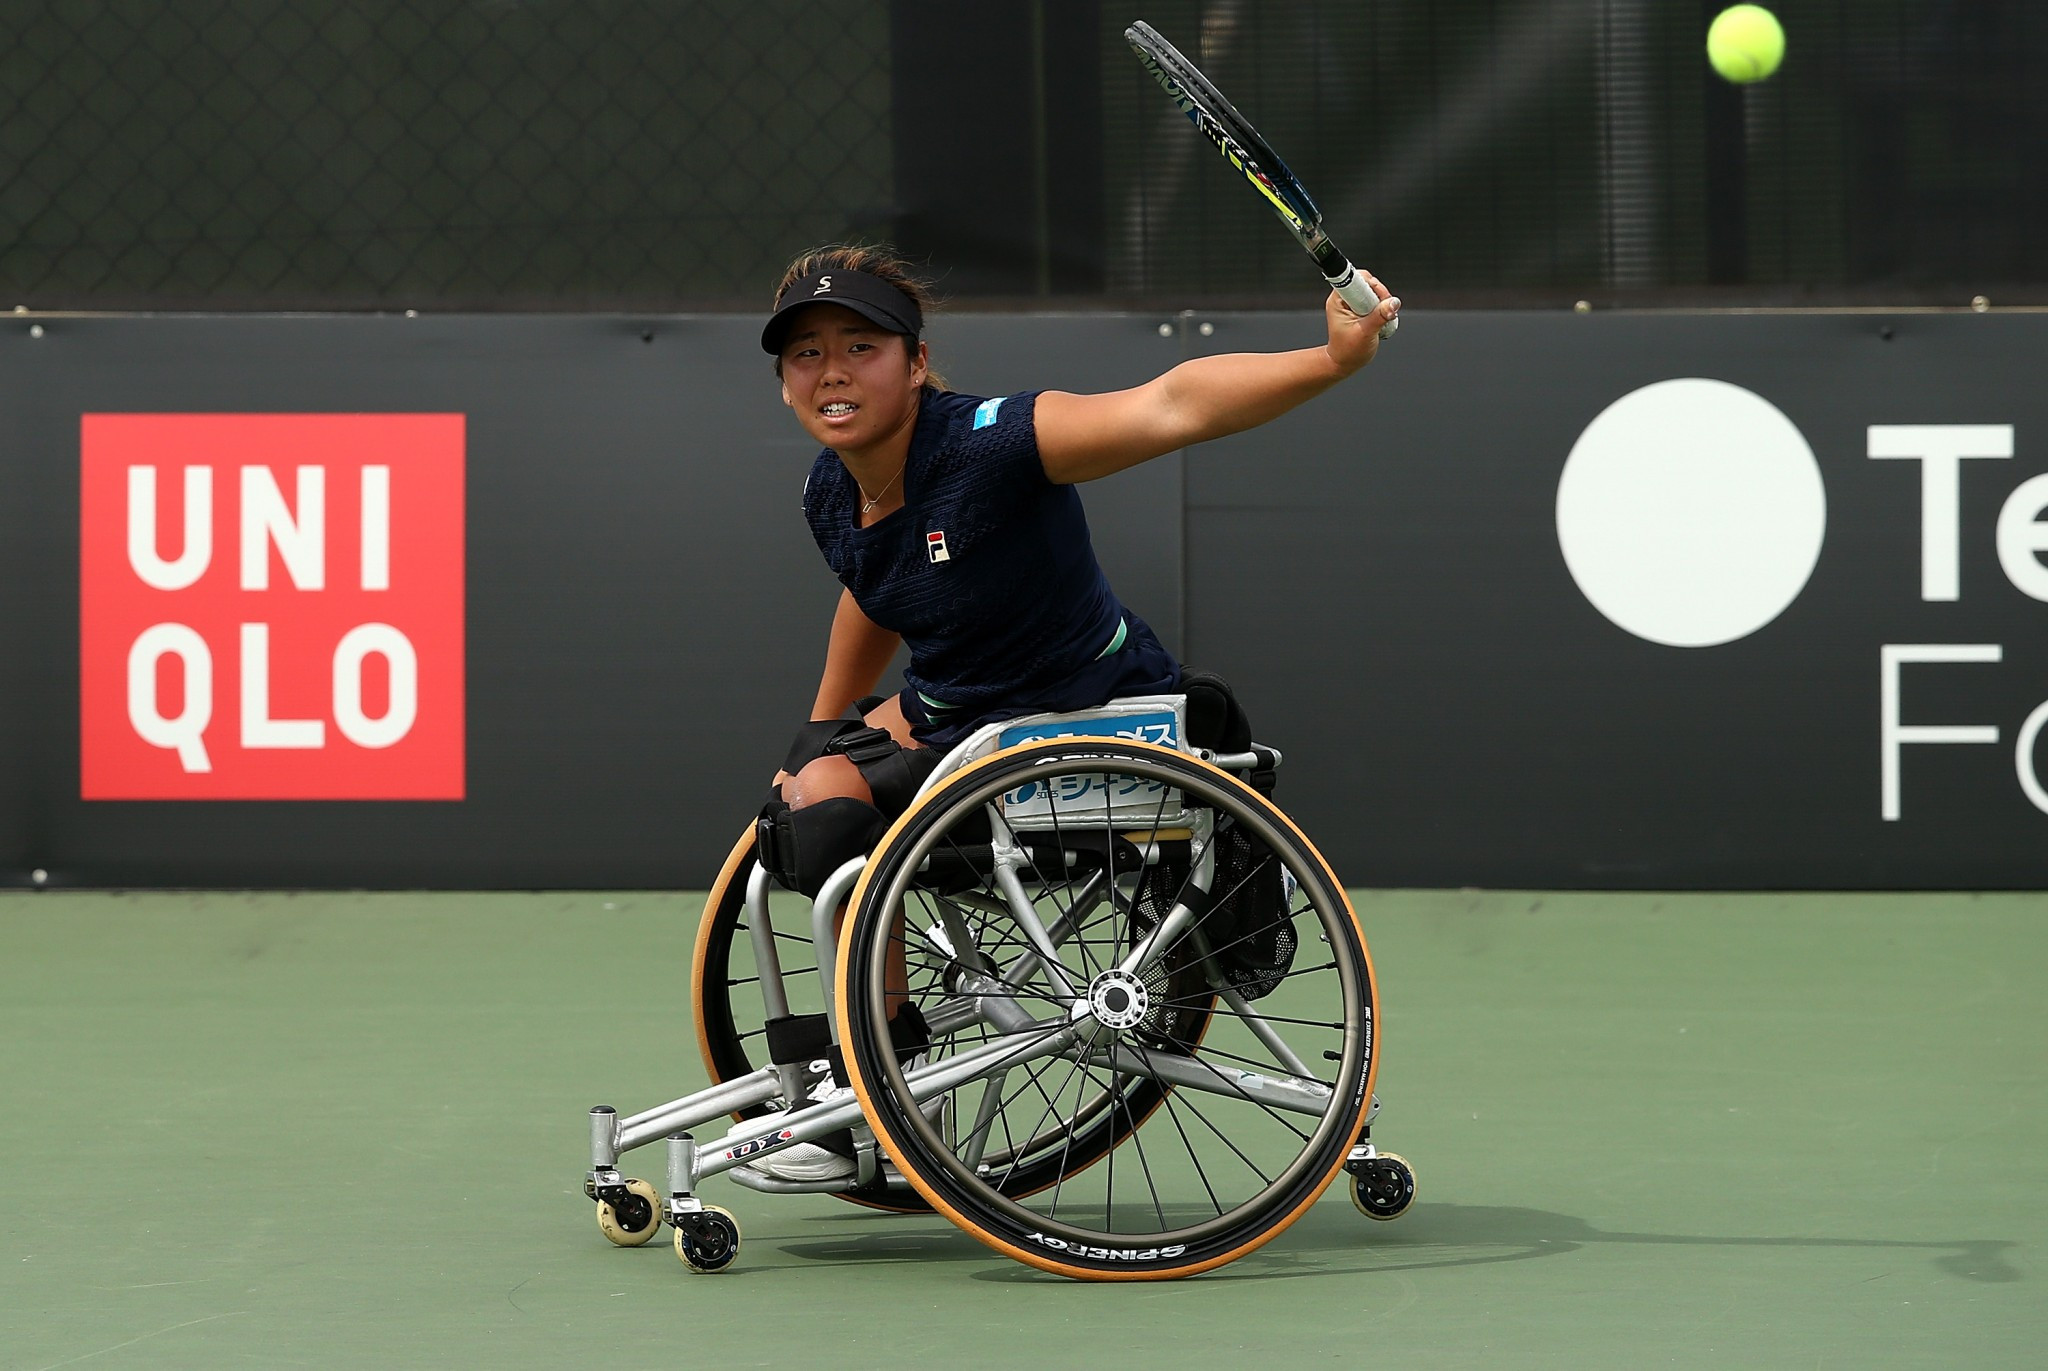 Kamiji thrashes Shuker to reach US Open Championships semi-final